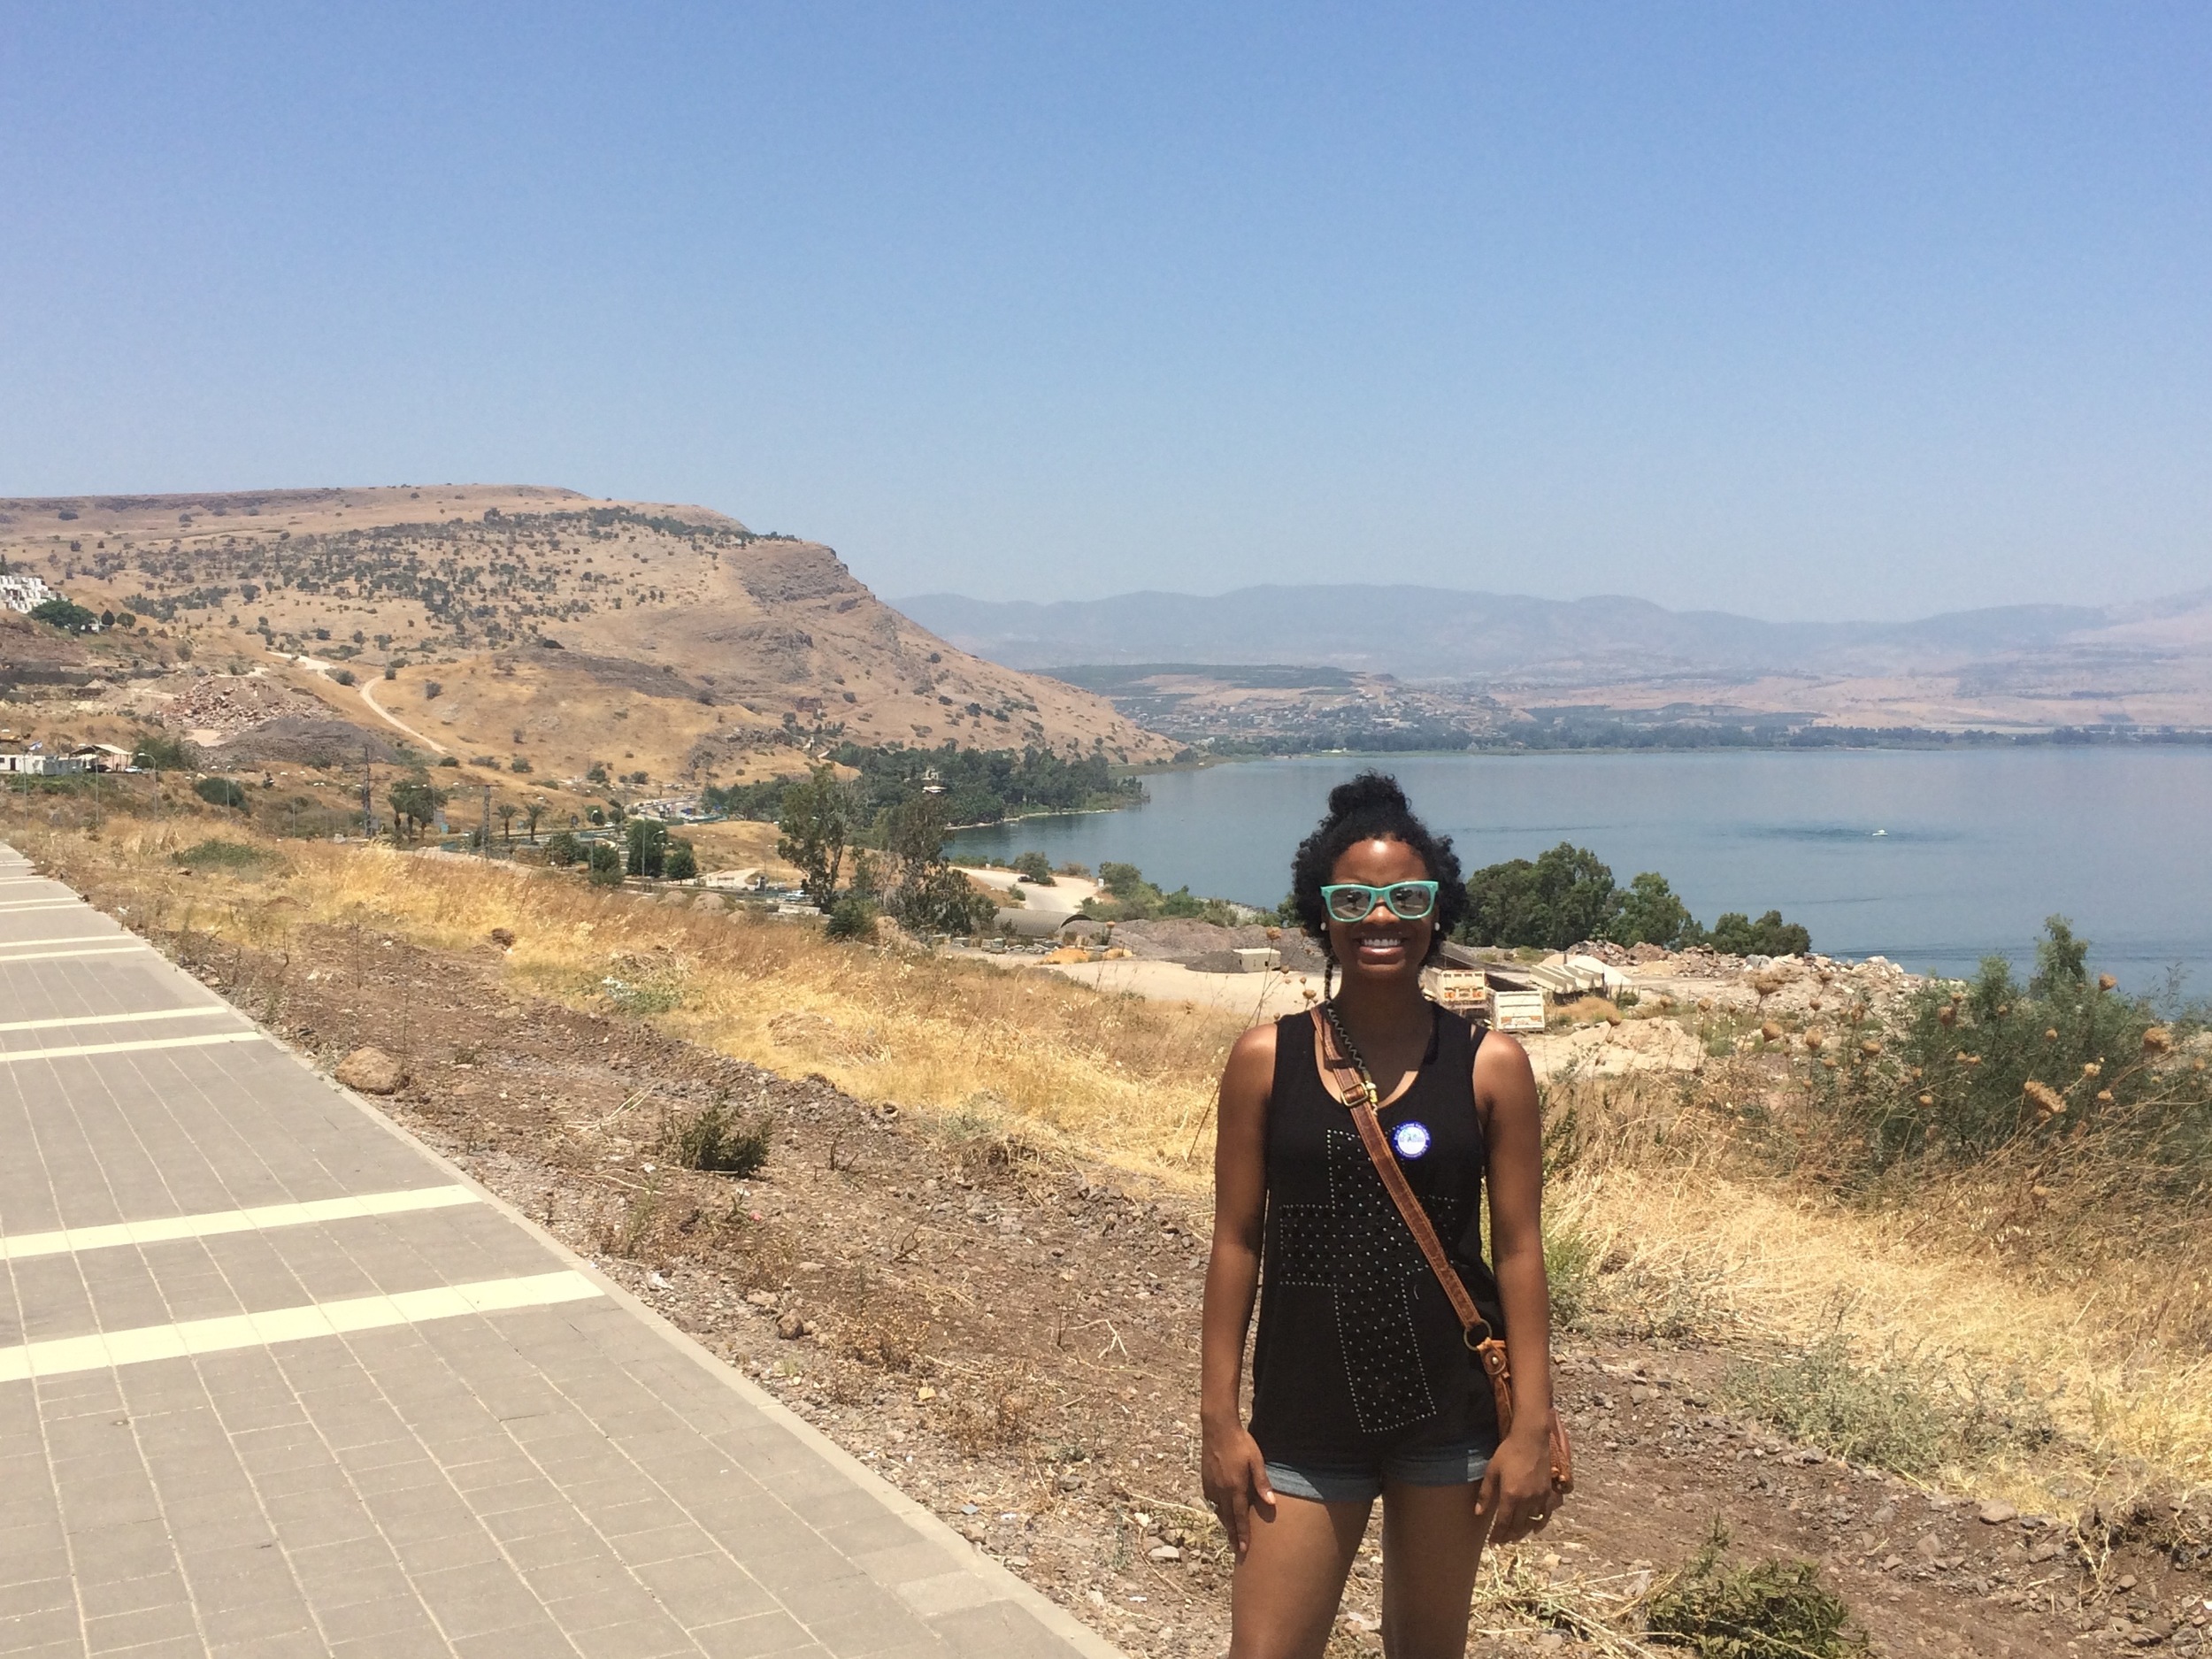 Kodak Moment: Headed to Sea of Galilee